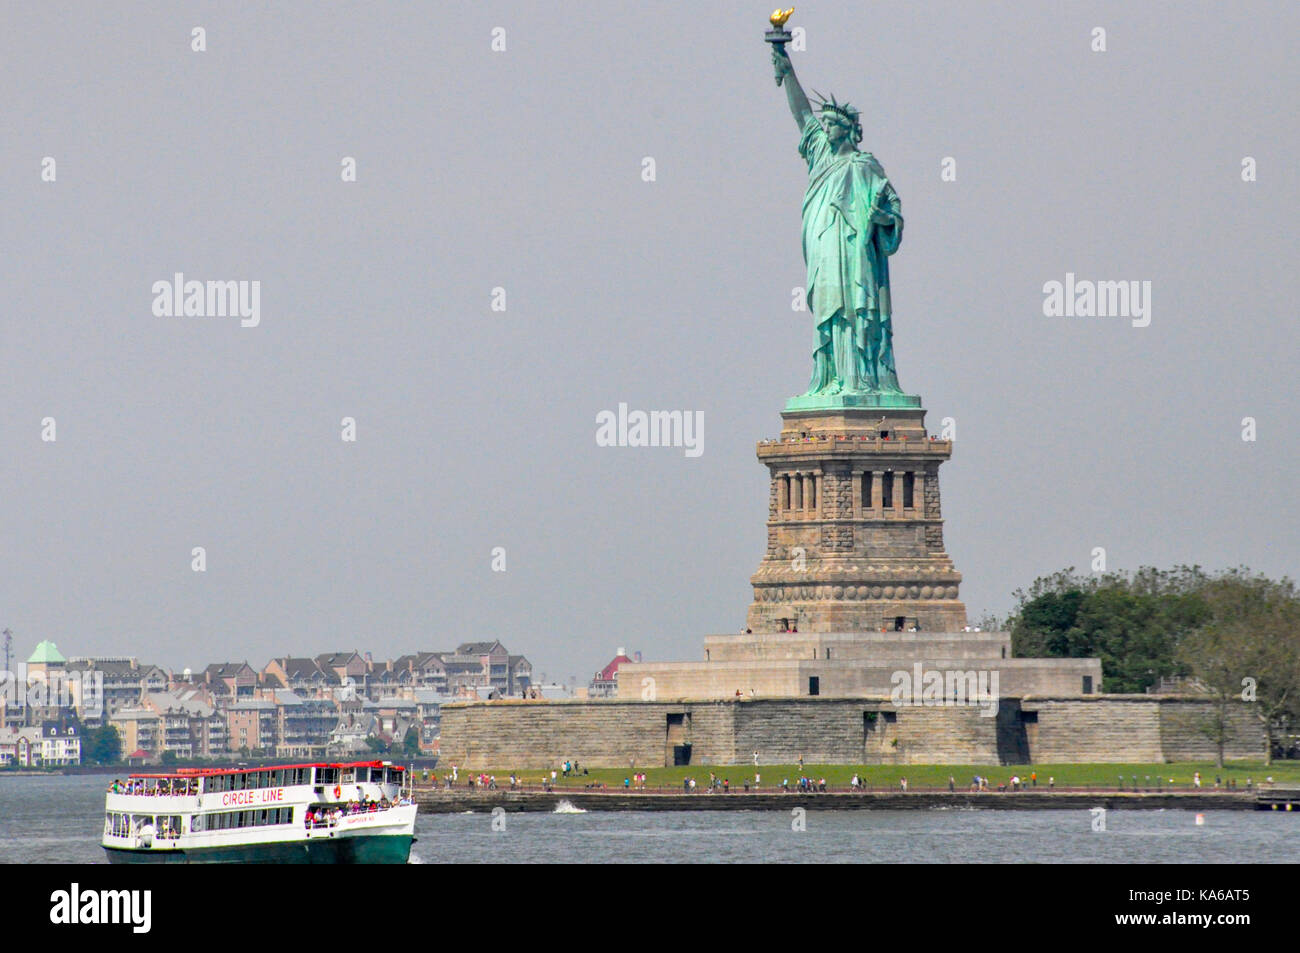 Circle Line tourist ferry passing the Statue of Liberty, New York City, USA. Stock Photo